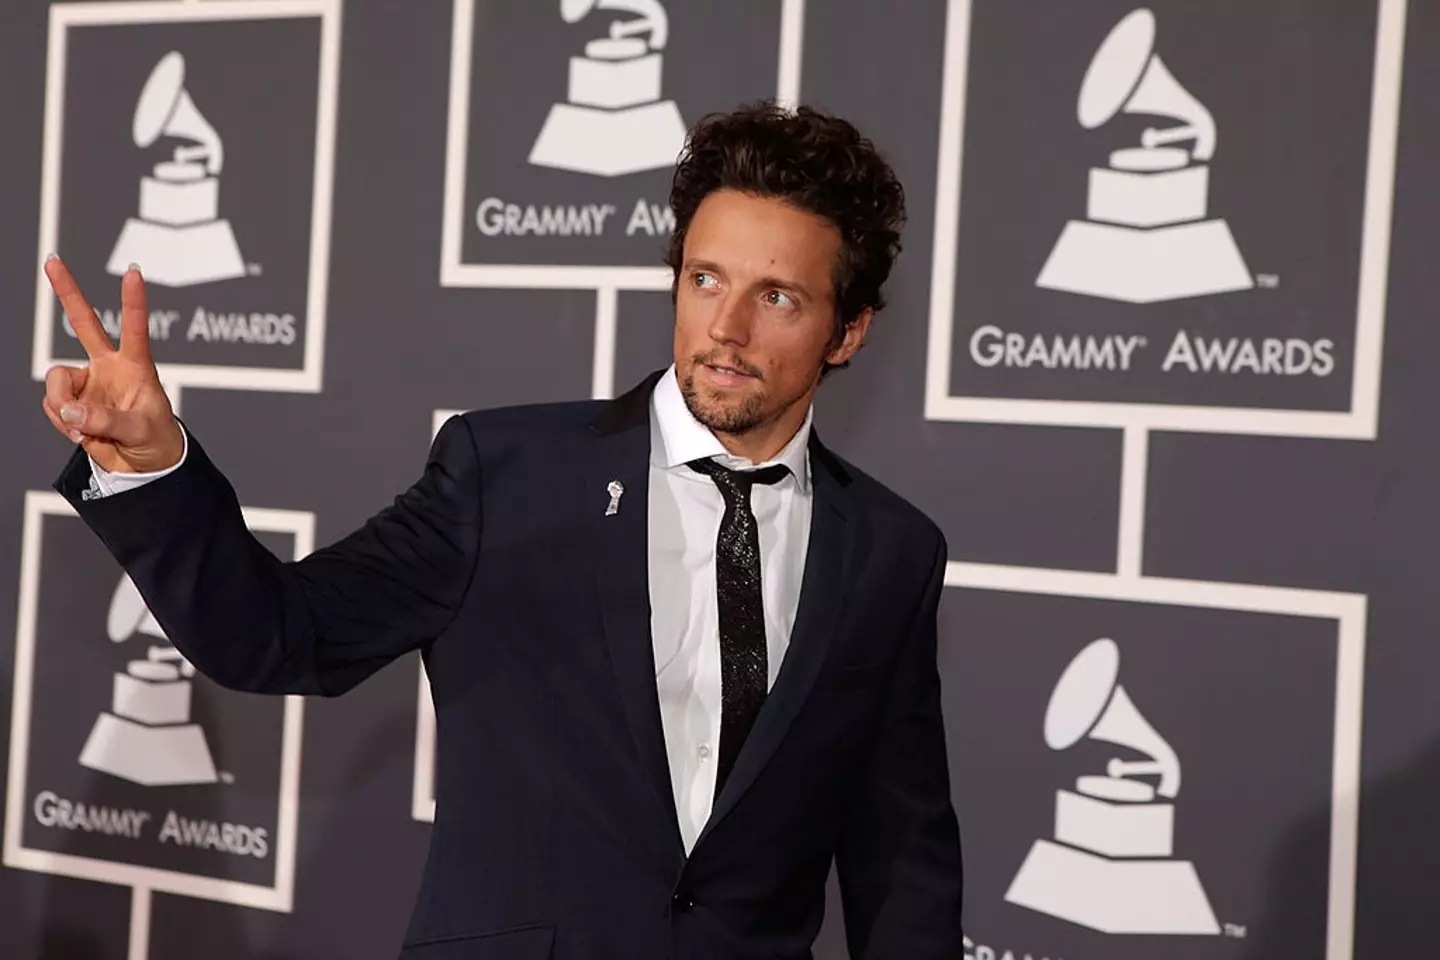 The American singer-songwriter is a Grammy award winner. (Jeff Vespa/WireImage)